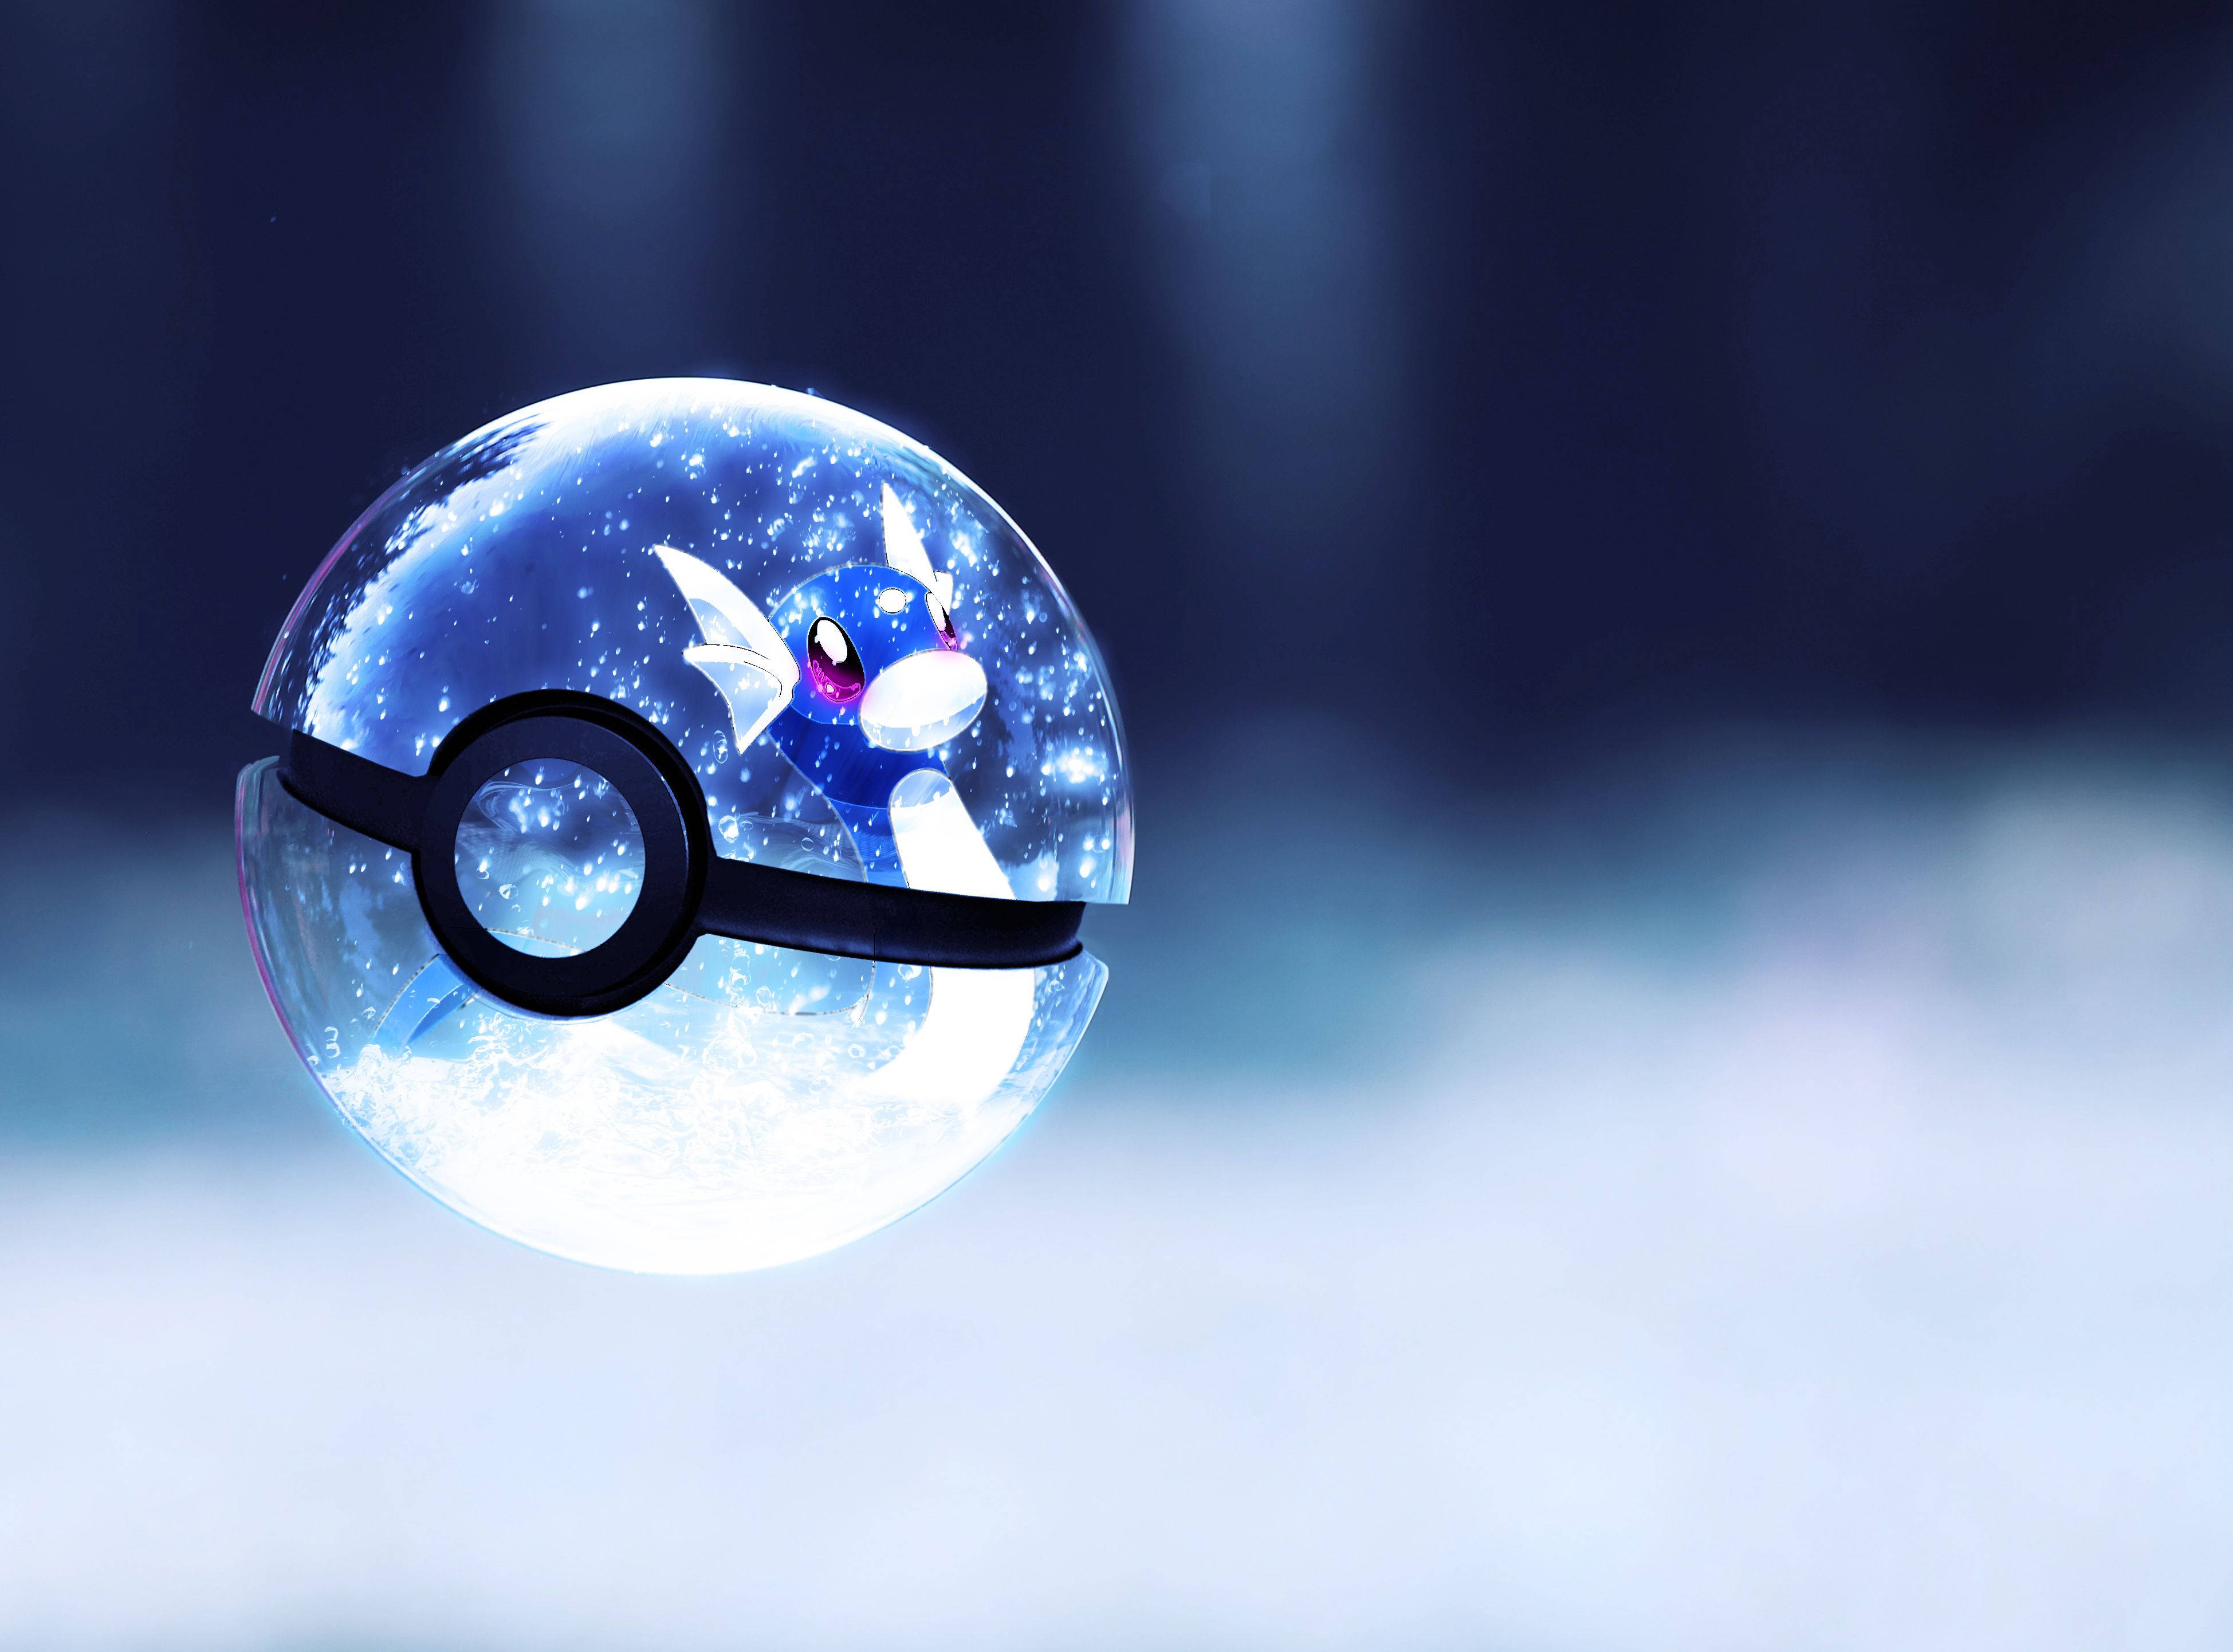 Trending Blue Pokeball With Dratini Pokemon